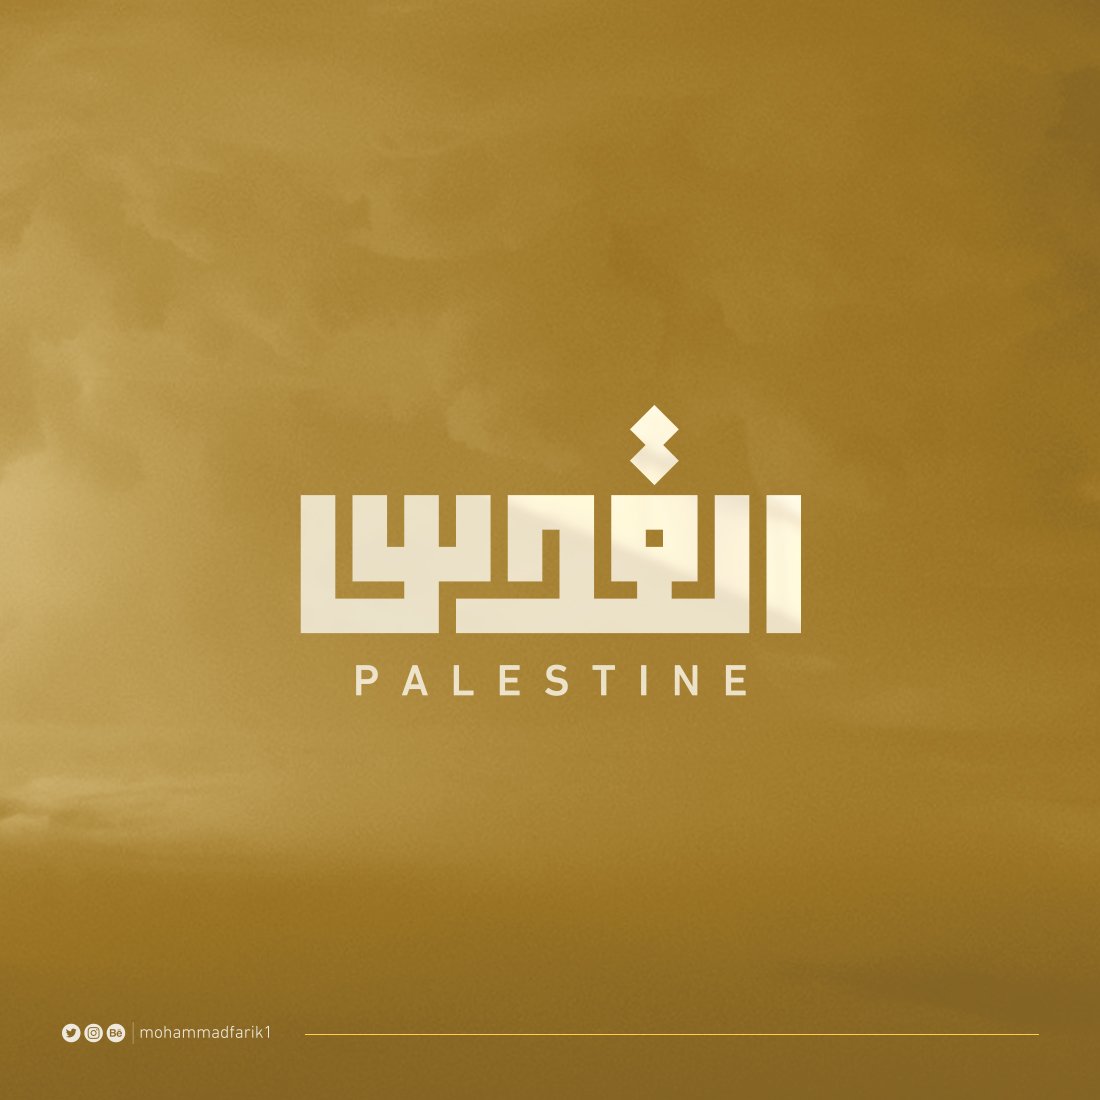 الــقـدس / AlQuds - Palestine 
---------------
#Palestine #Typography #ArabicType #Kufic #SquareKufic